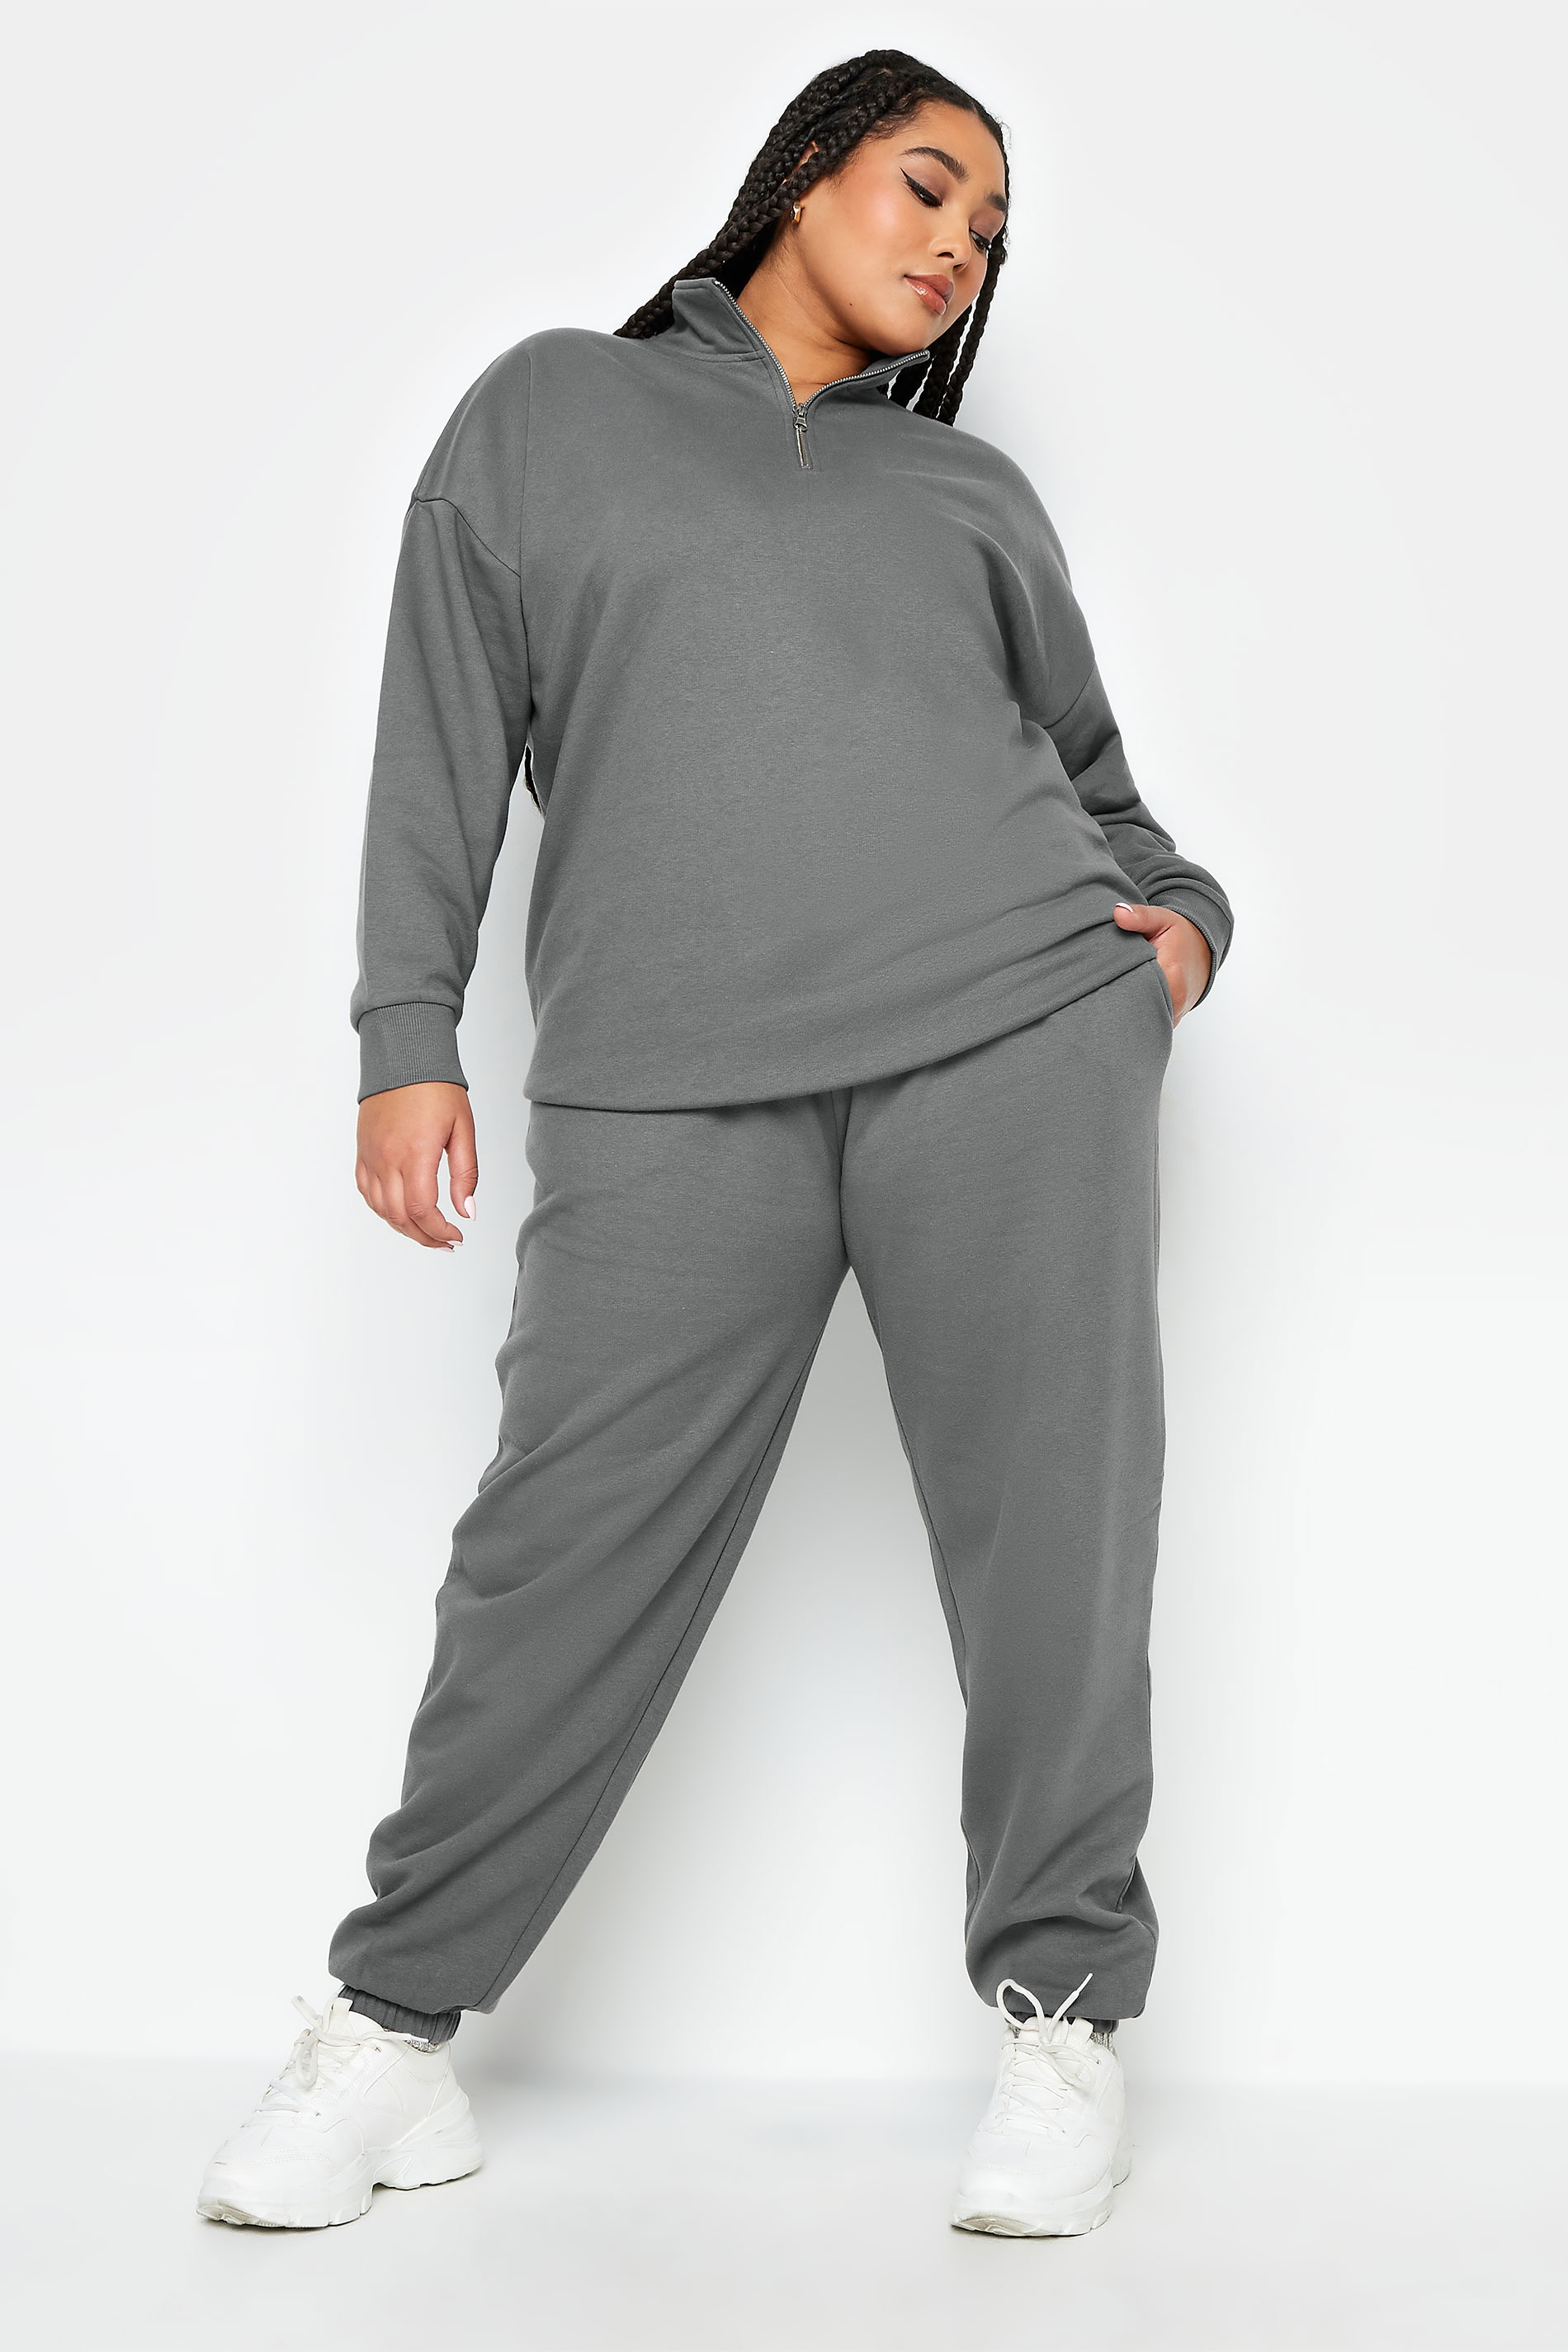 YOURS Plus Size Grey Quarter Zip Sweatshirt | Yours Clothing 3